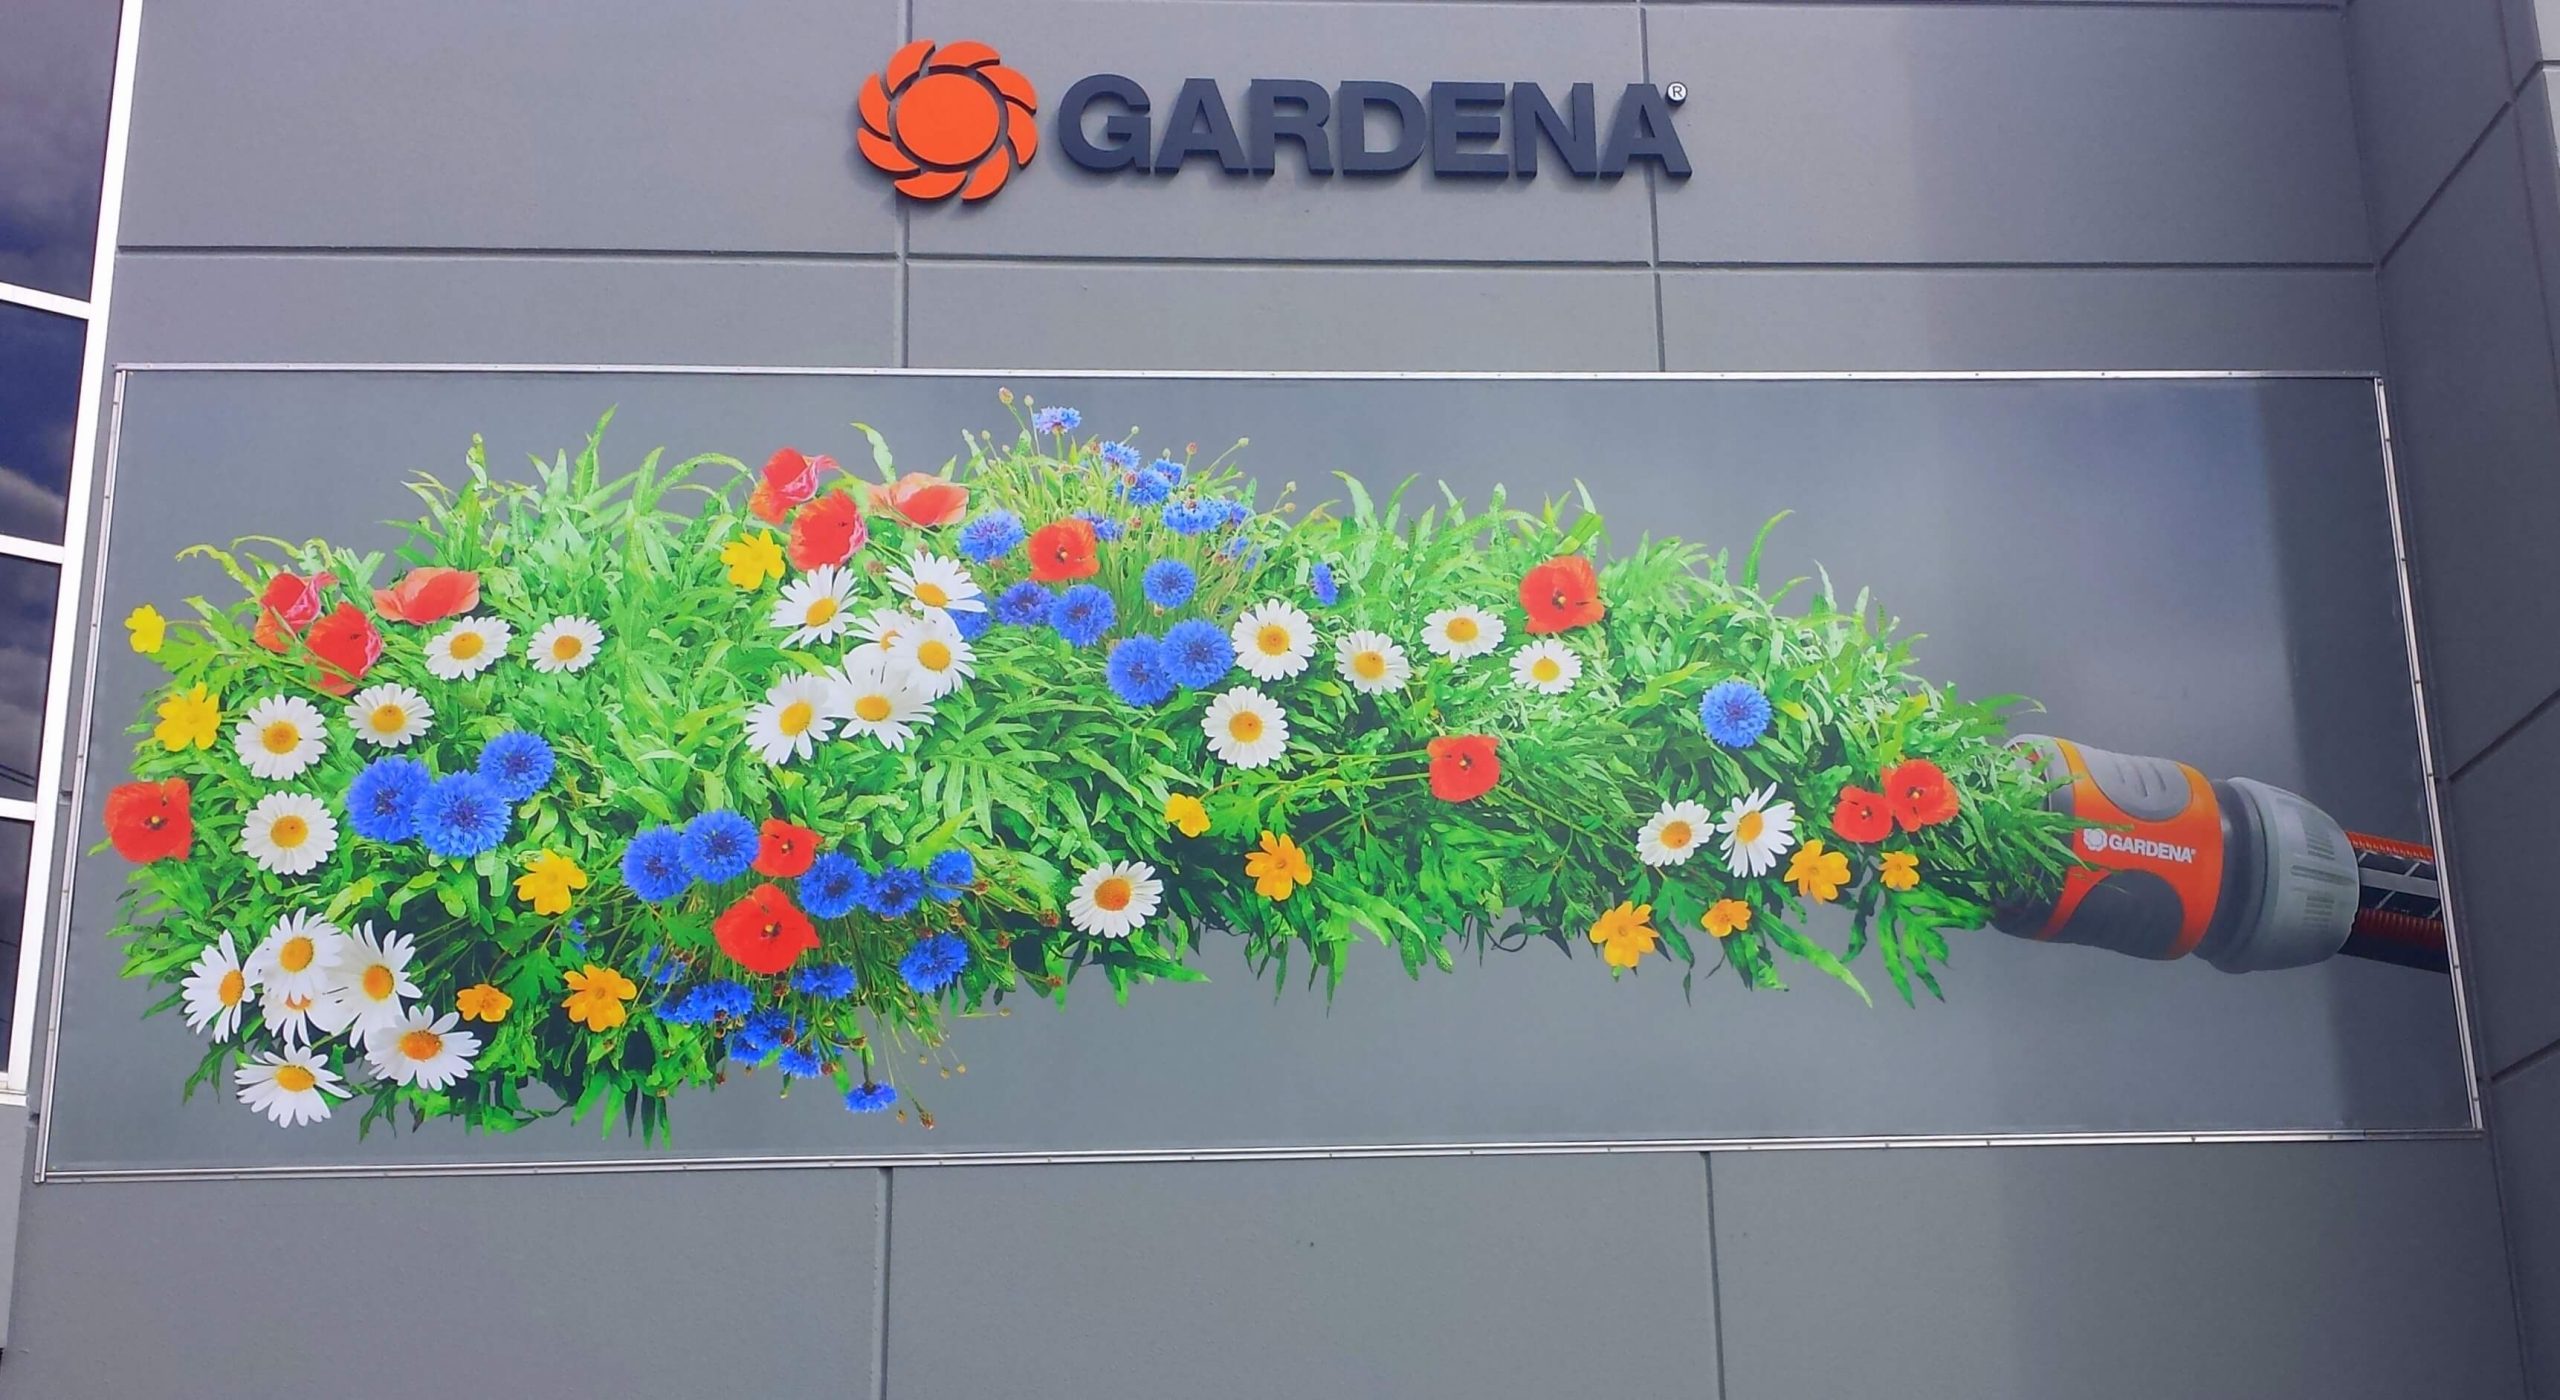 Gardenia Digital print banner